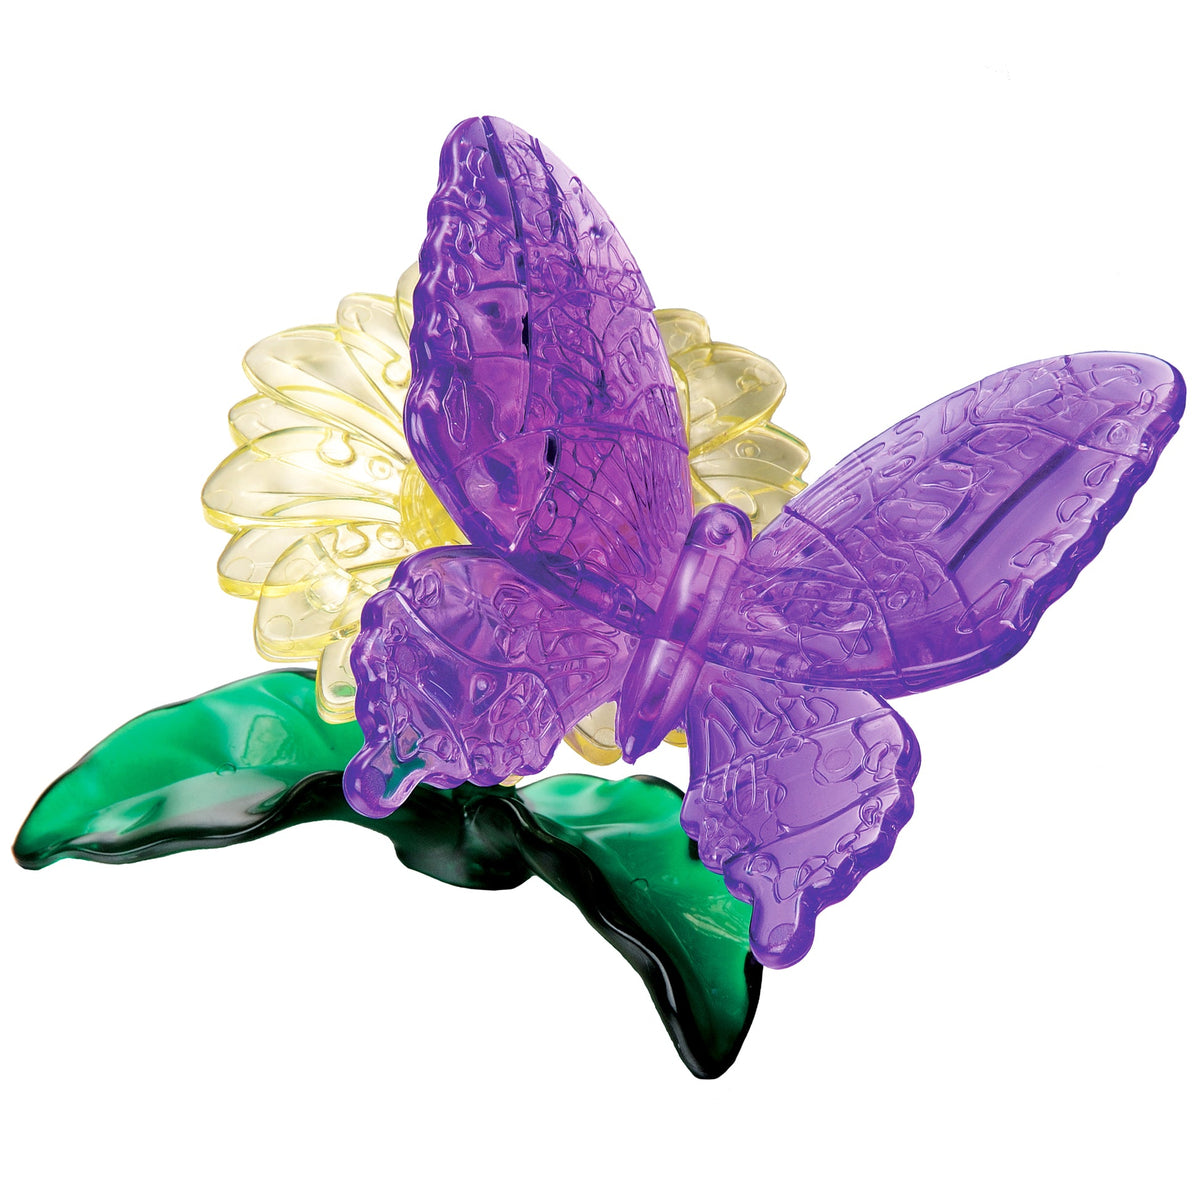 Puslespil - 3D Crystal Puzzle: Sommerfugl (Lilla), 38 brikker